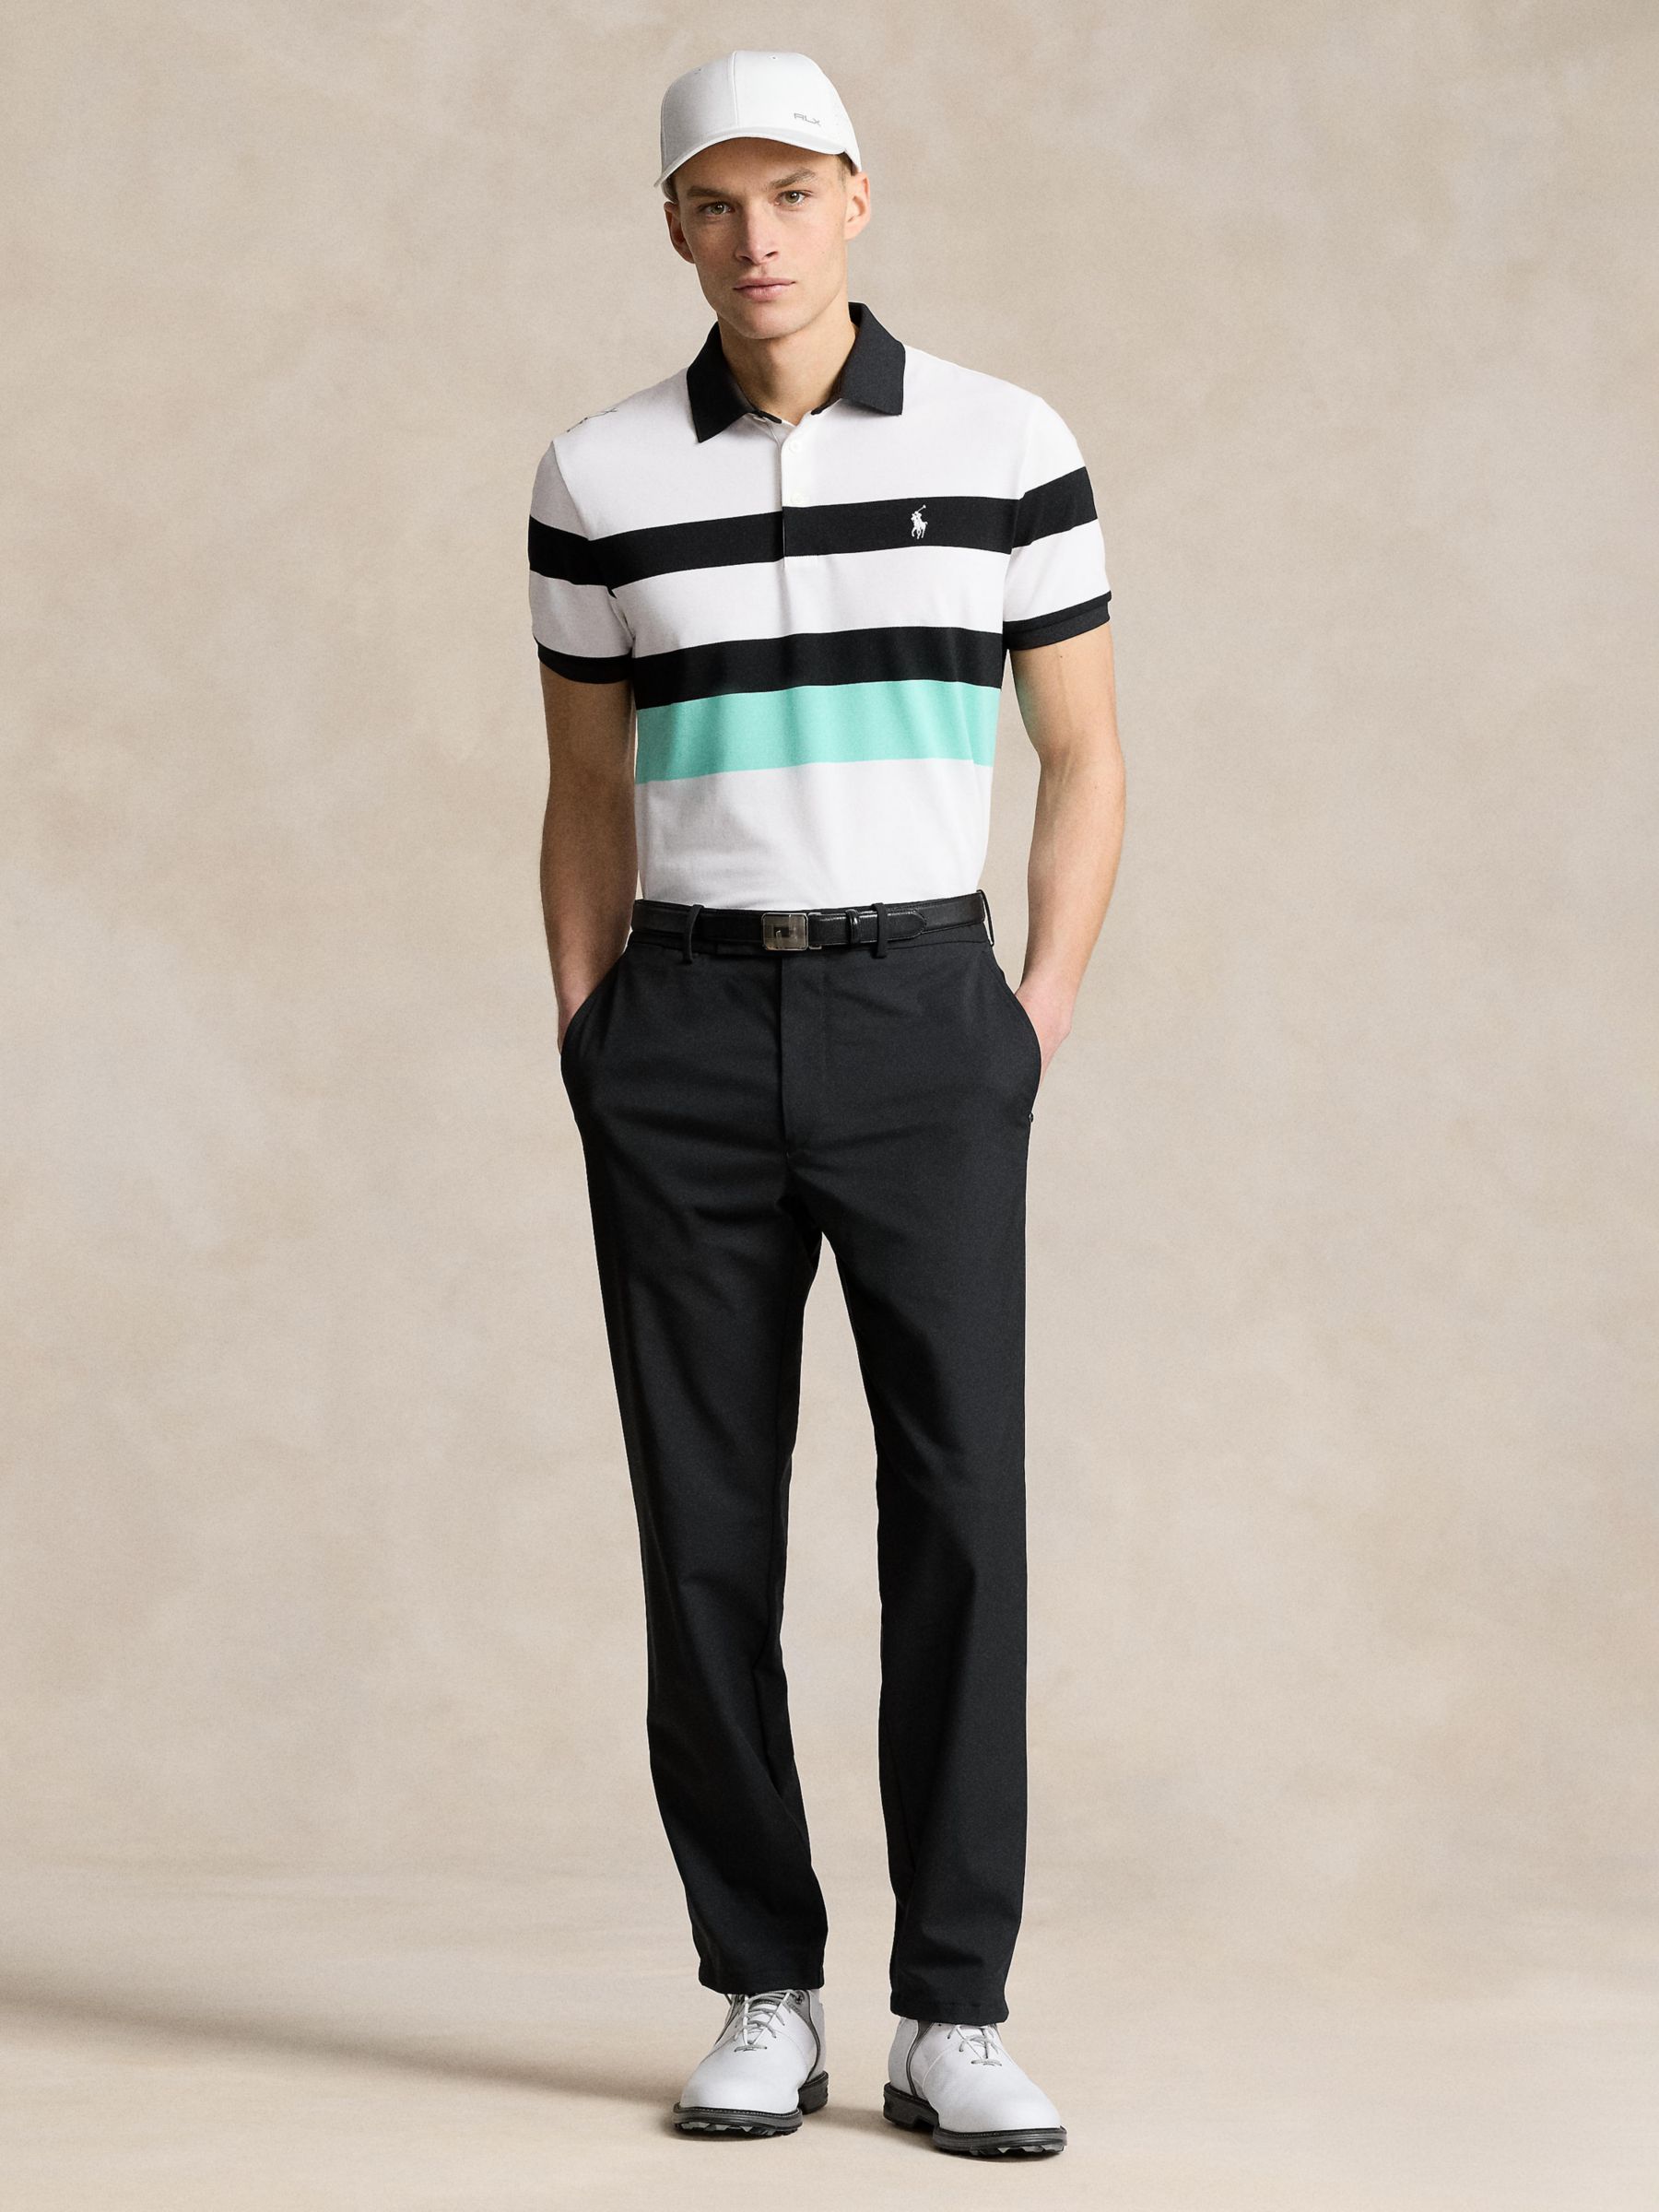 Ralph Lauren Tailored Fit Performance Stripe Polo Shirt, Ceramic White/Multi, S